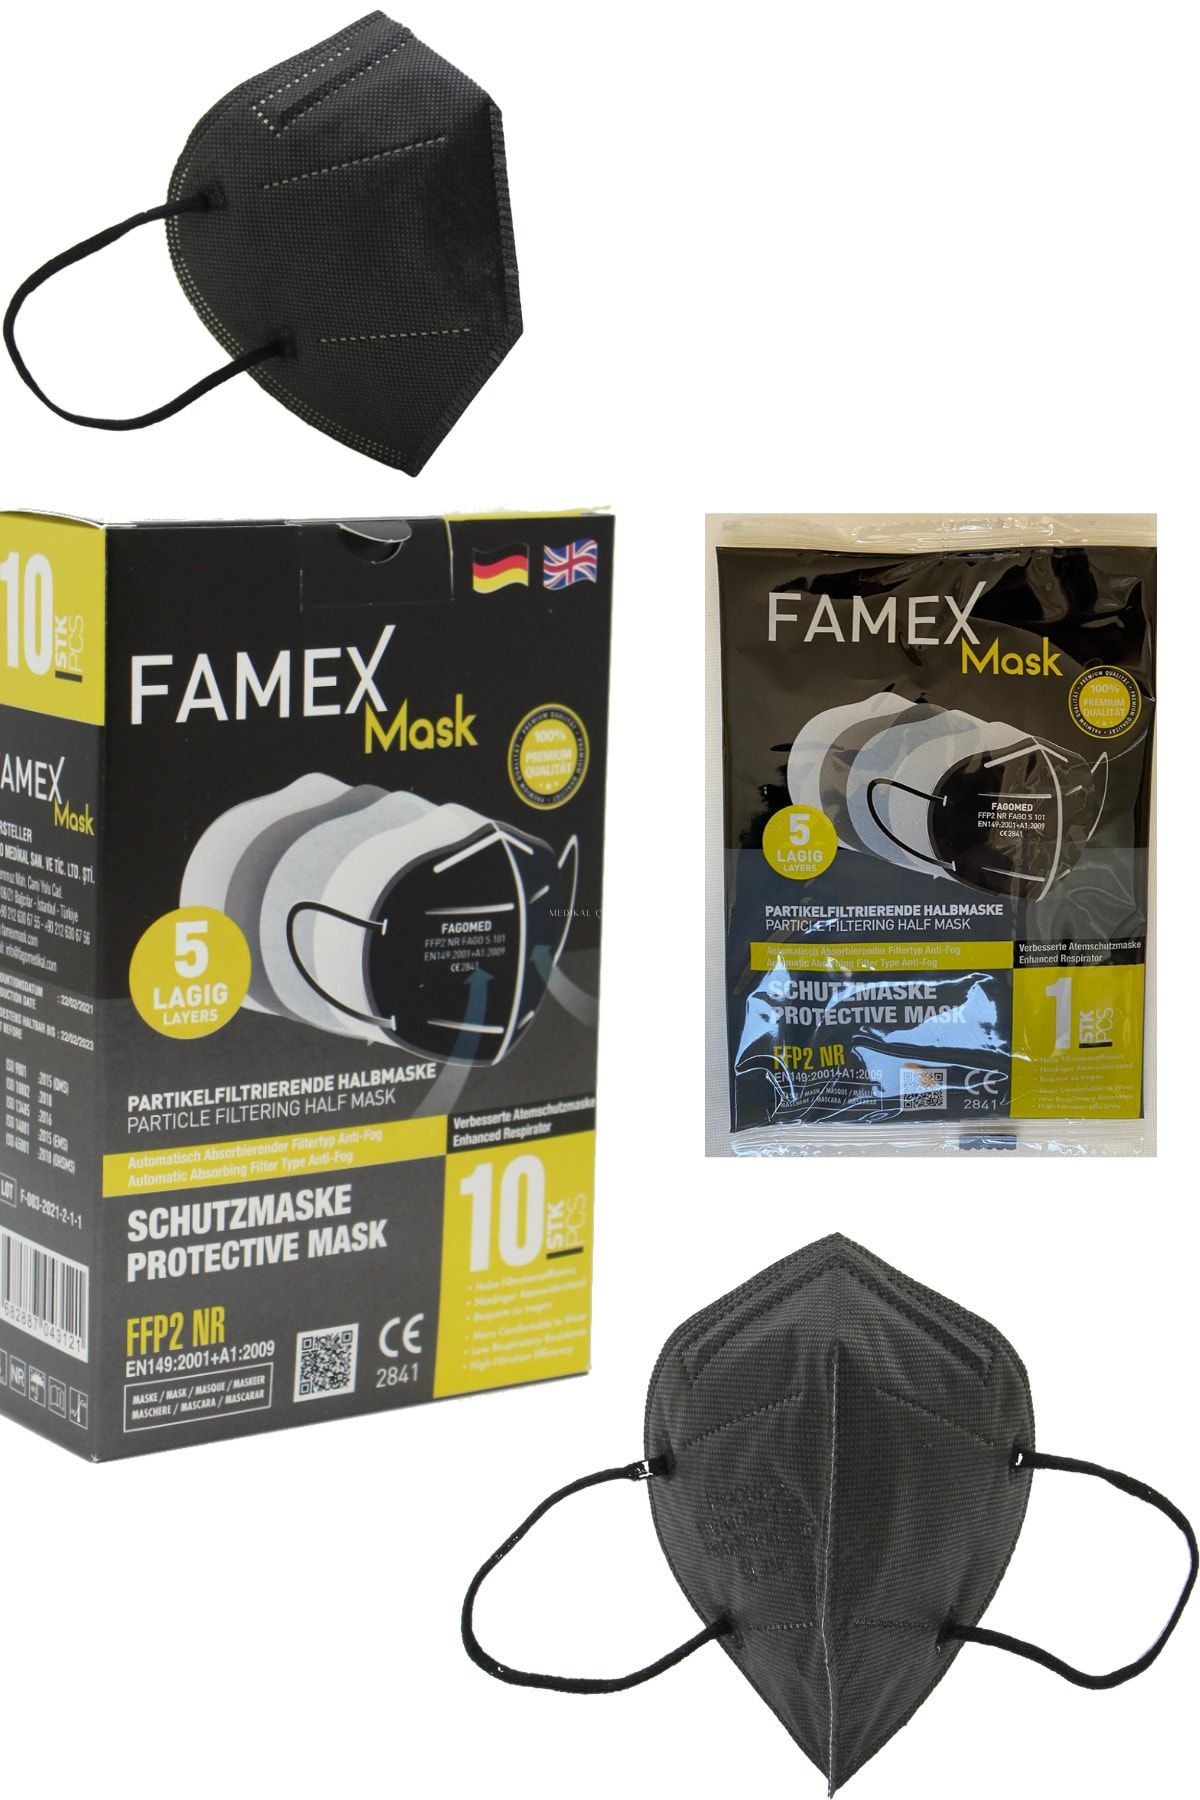 FAMEX MASK Famex Siyah Kn95 Ffp2 Nr Medikal Maske 10'lu